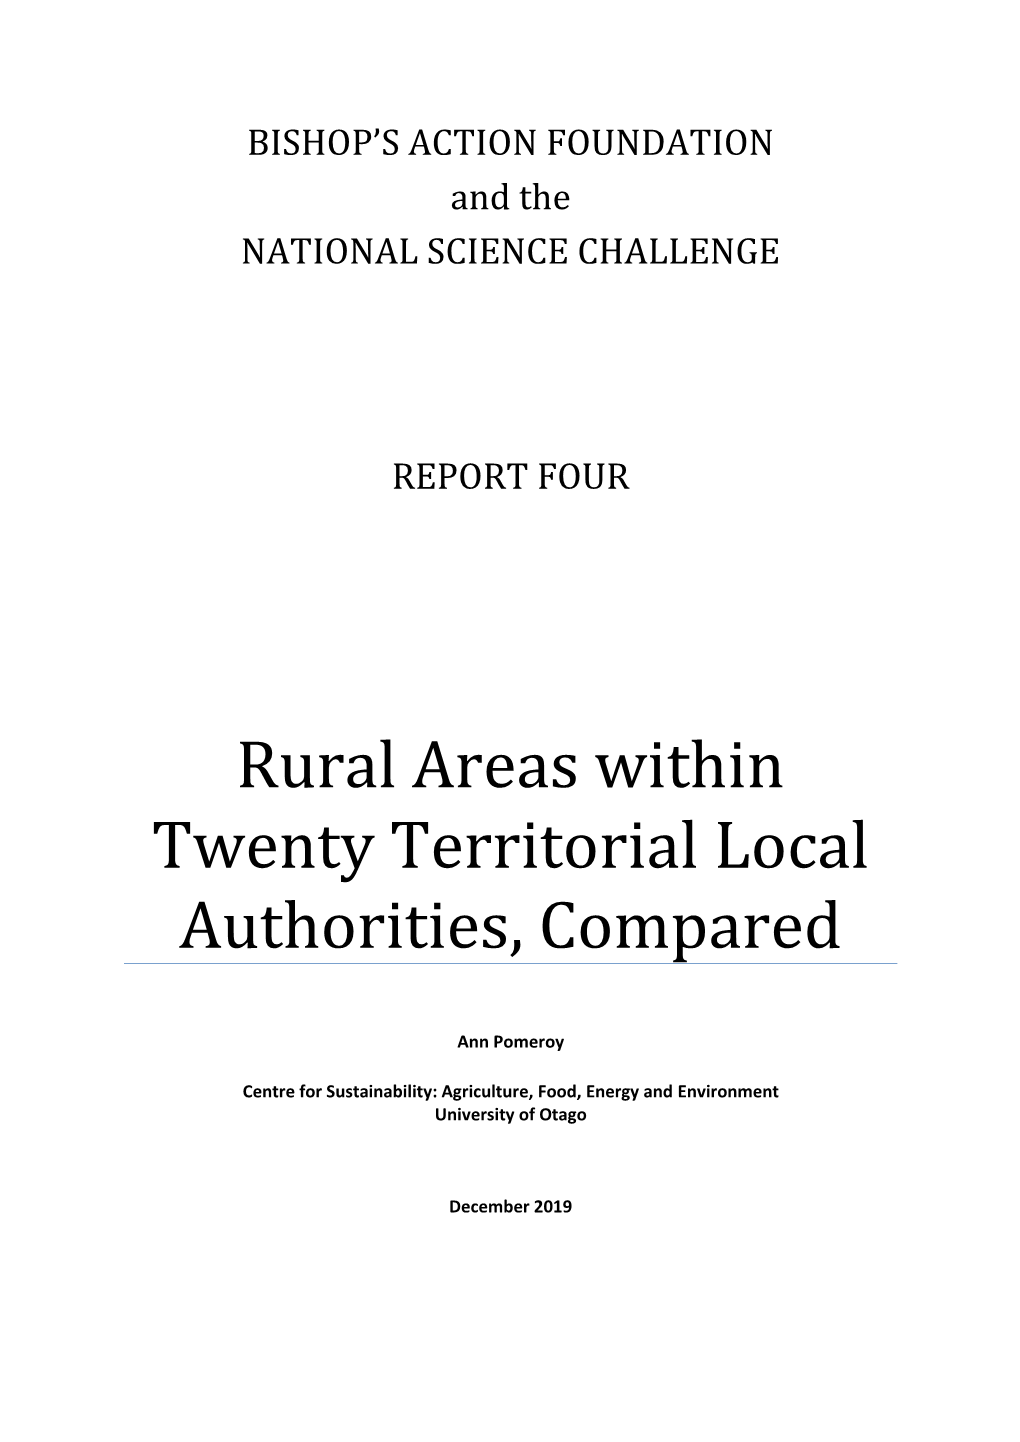 Report 4 Rural Areas of Twenty Territorial Authorities.Pdf (2.910Mb)